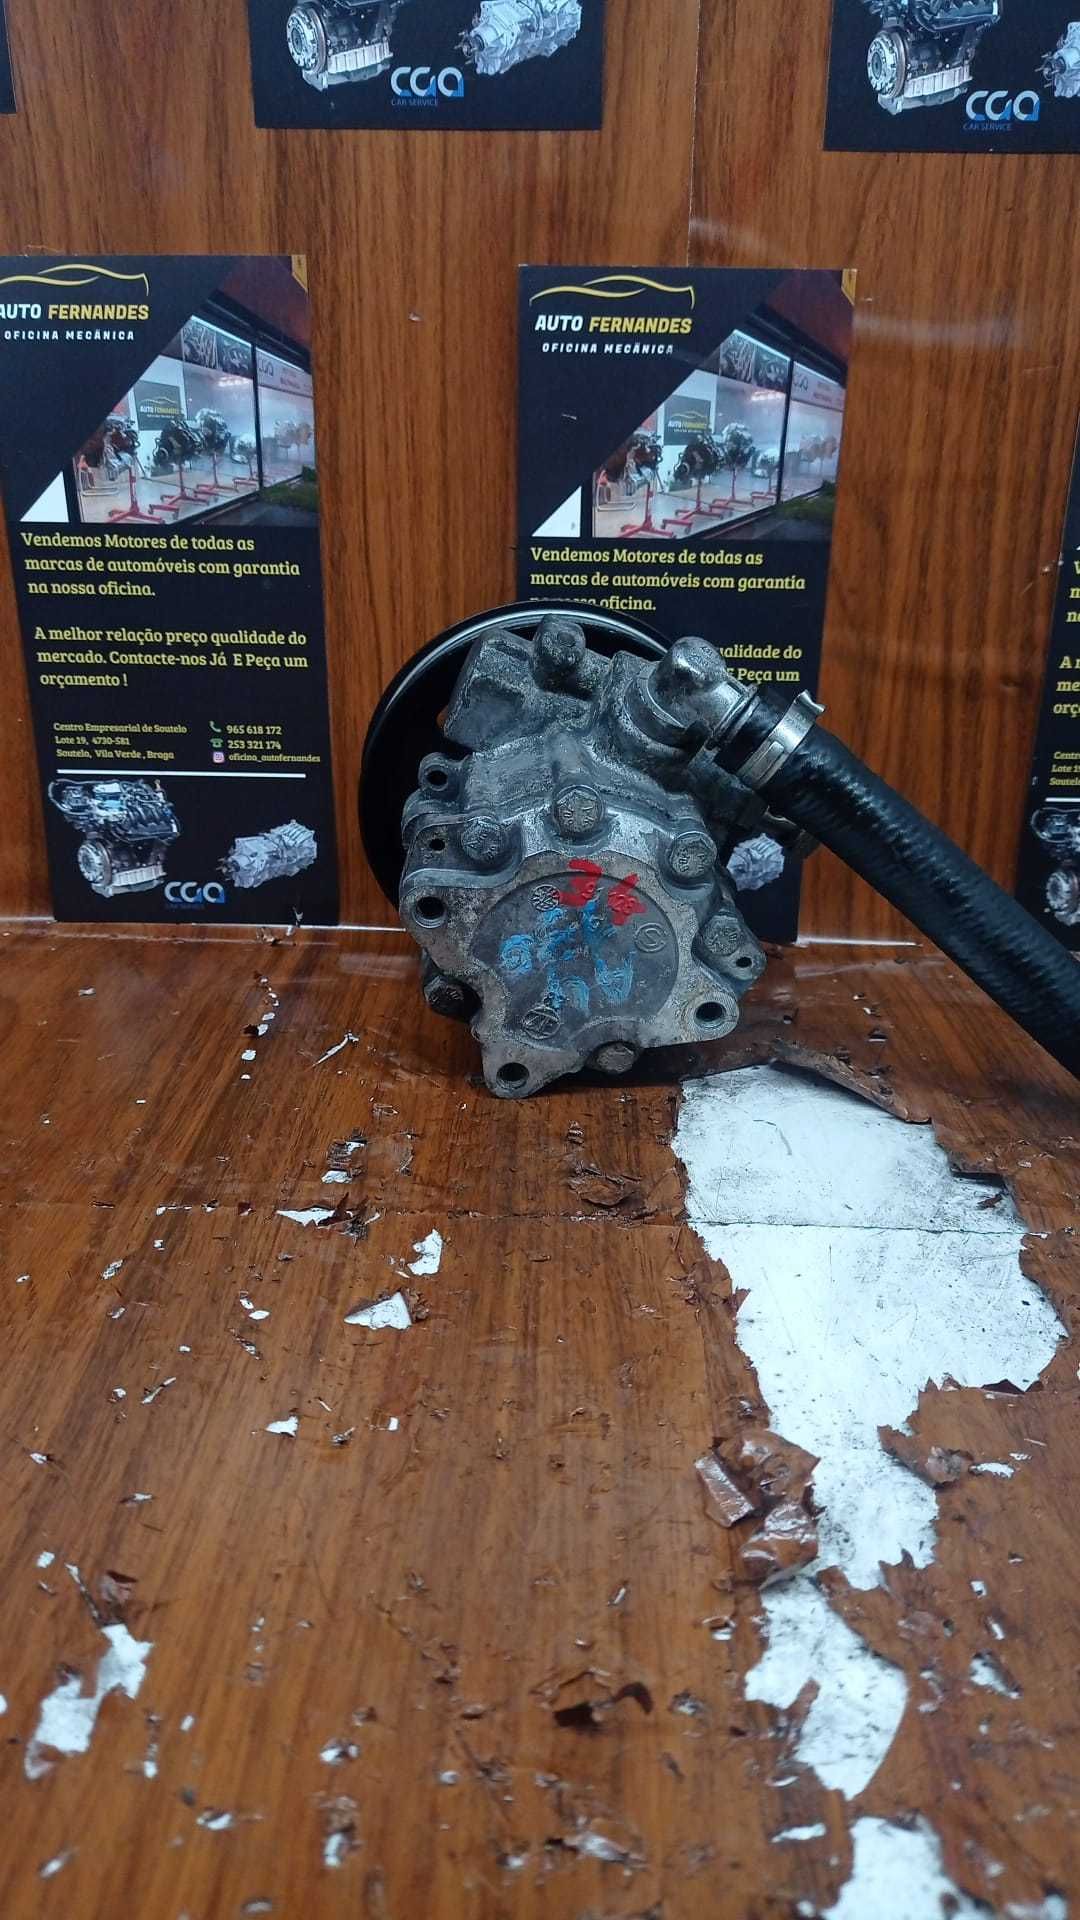 Bomba de Direção Audi

REF: 8 D 0 1 4 5 1 5 6 T